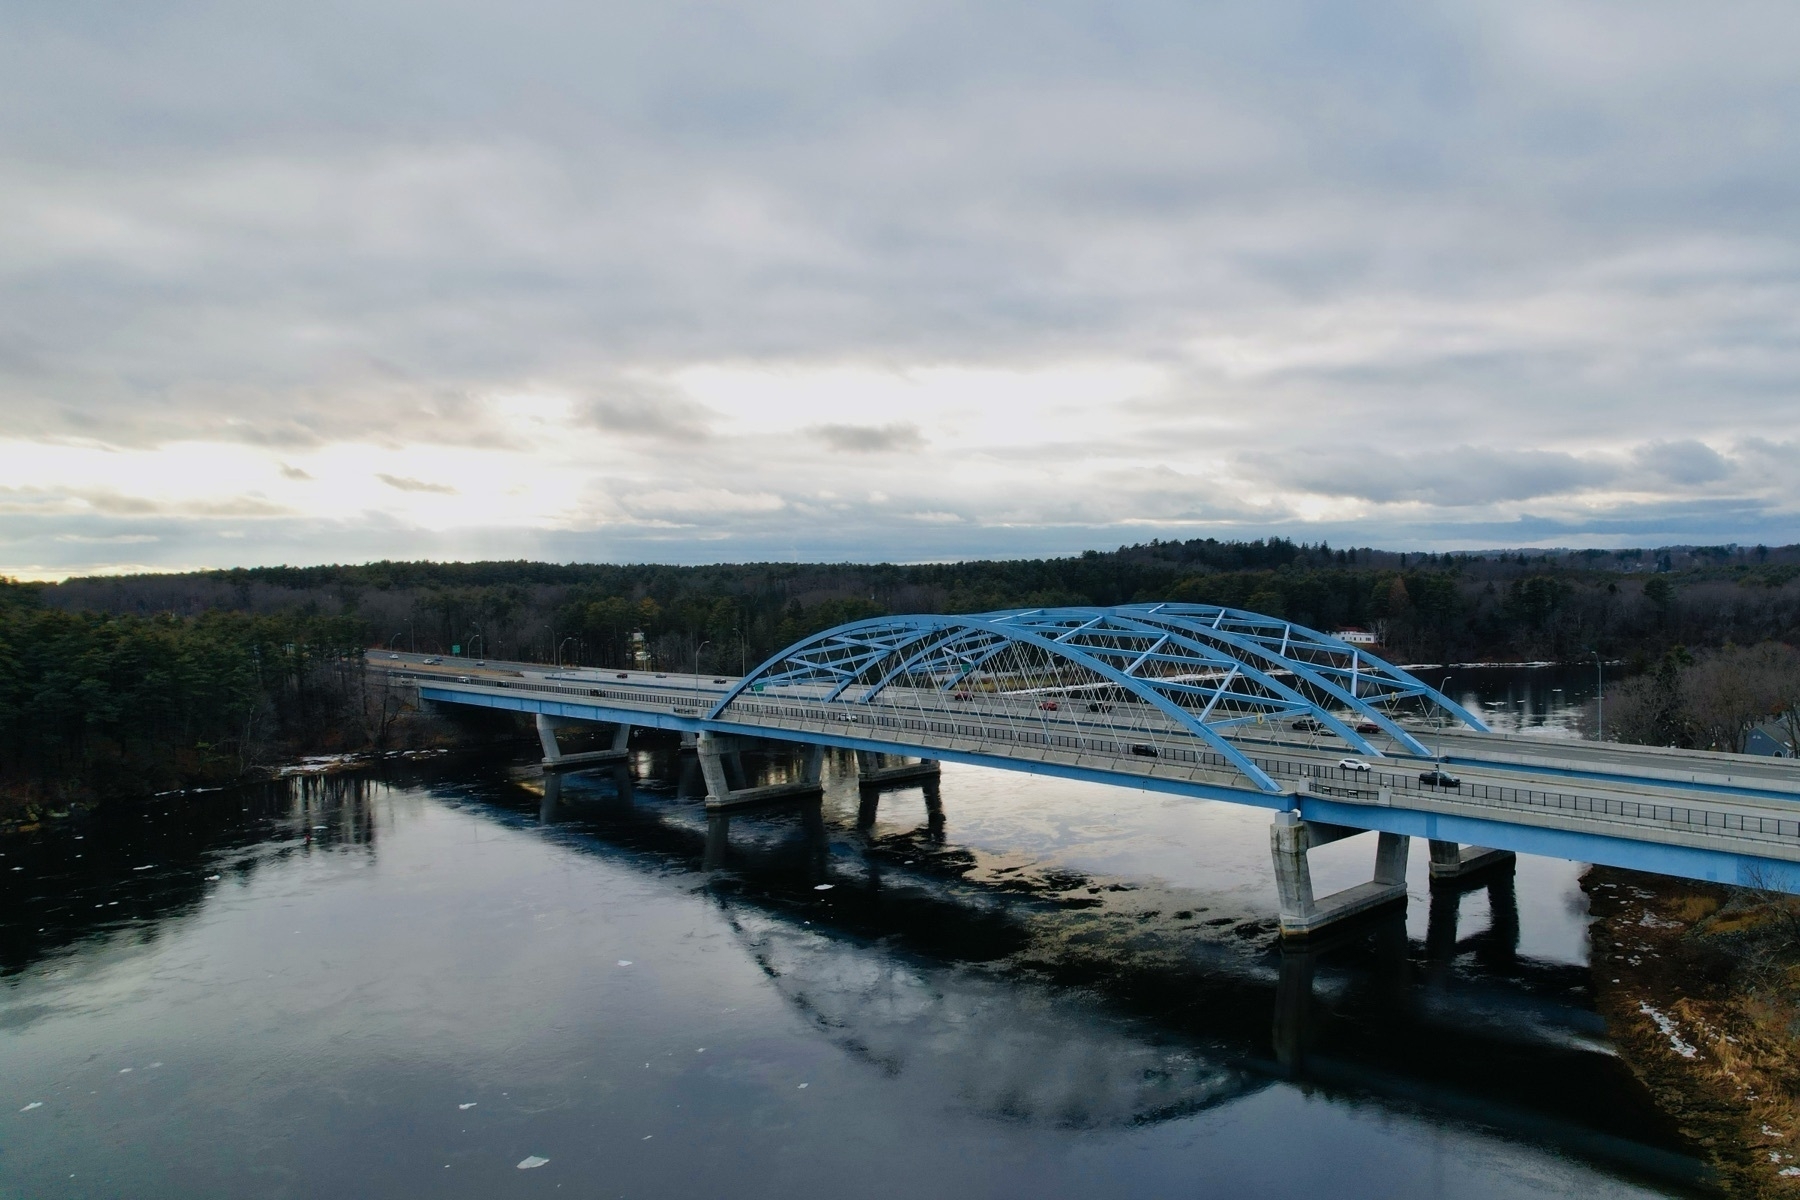 Whittier Bridge in Amesbury MA from a drone